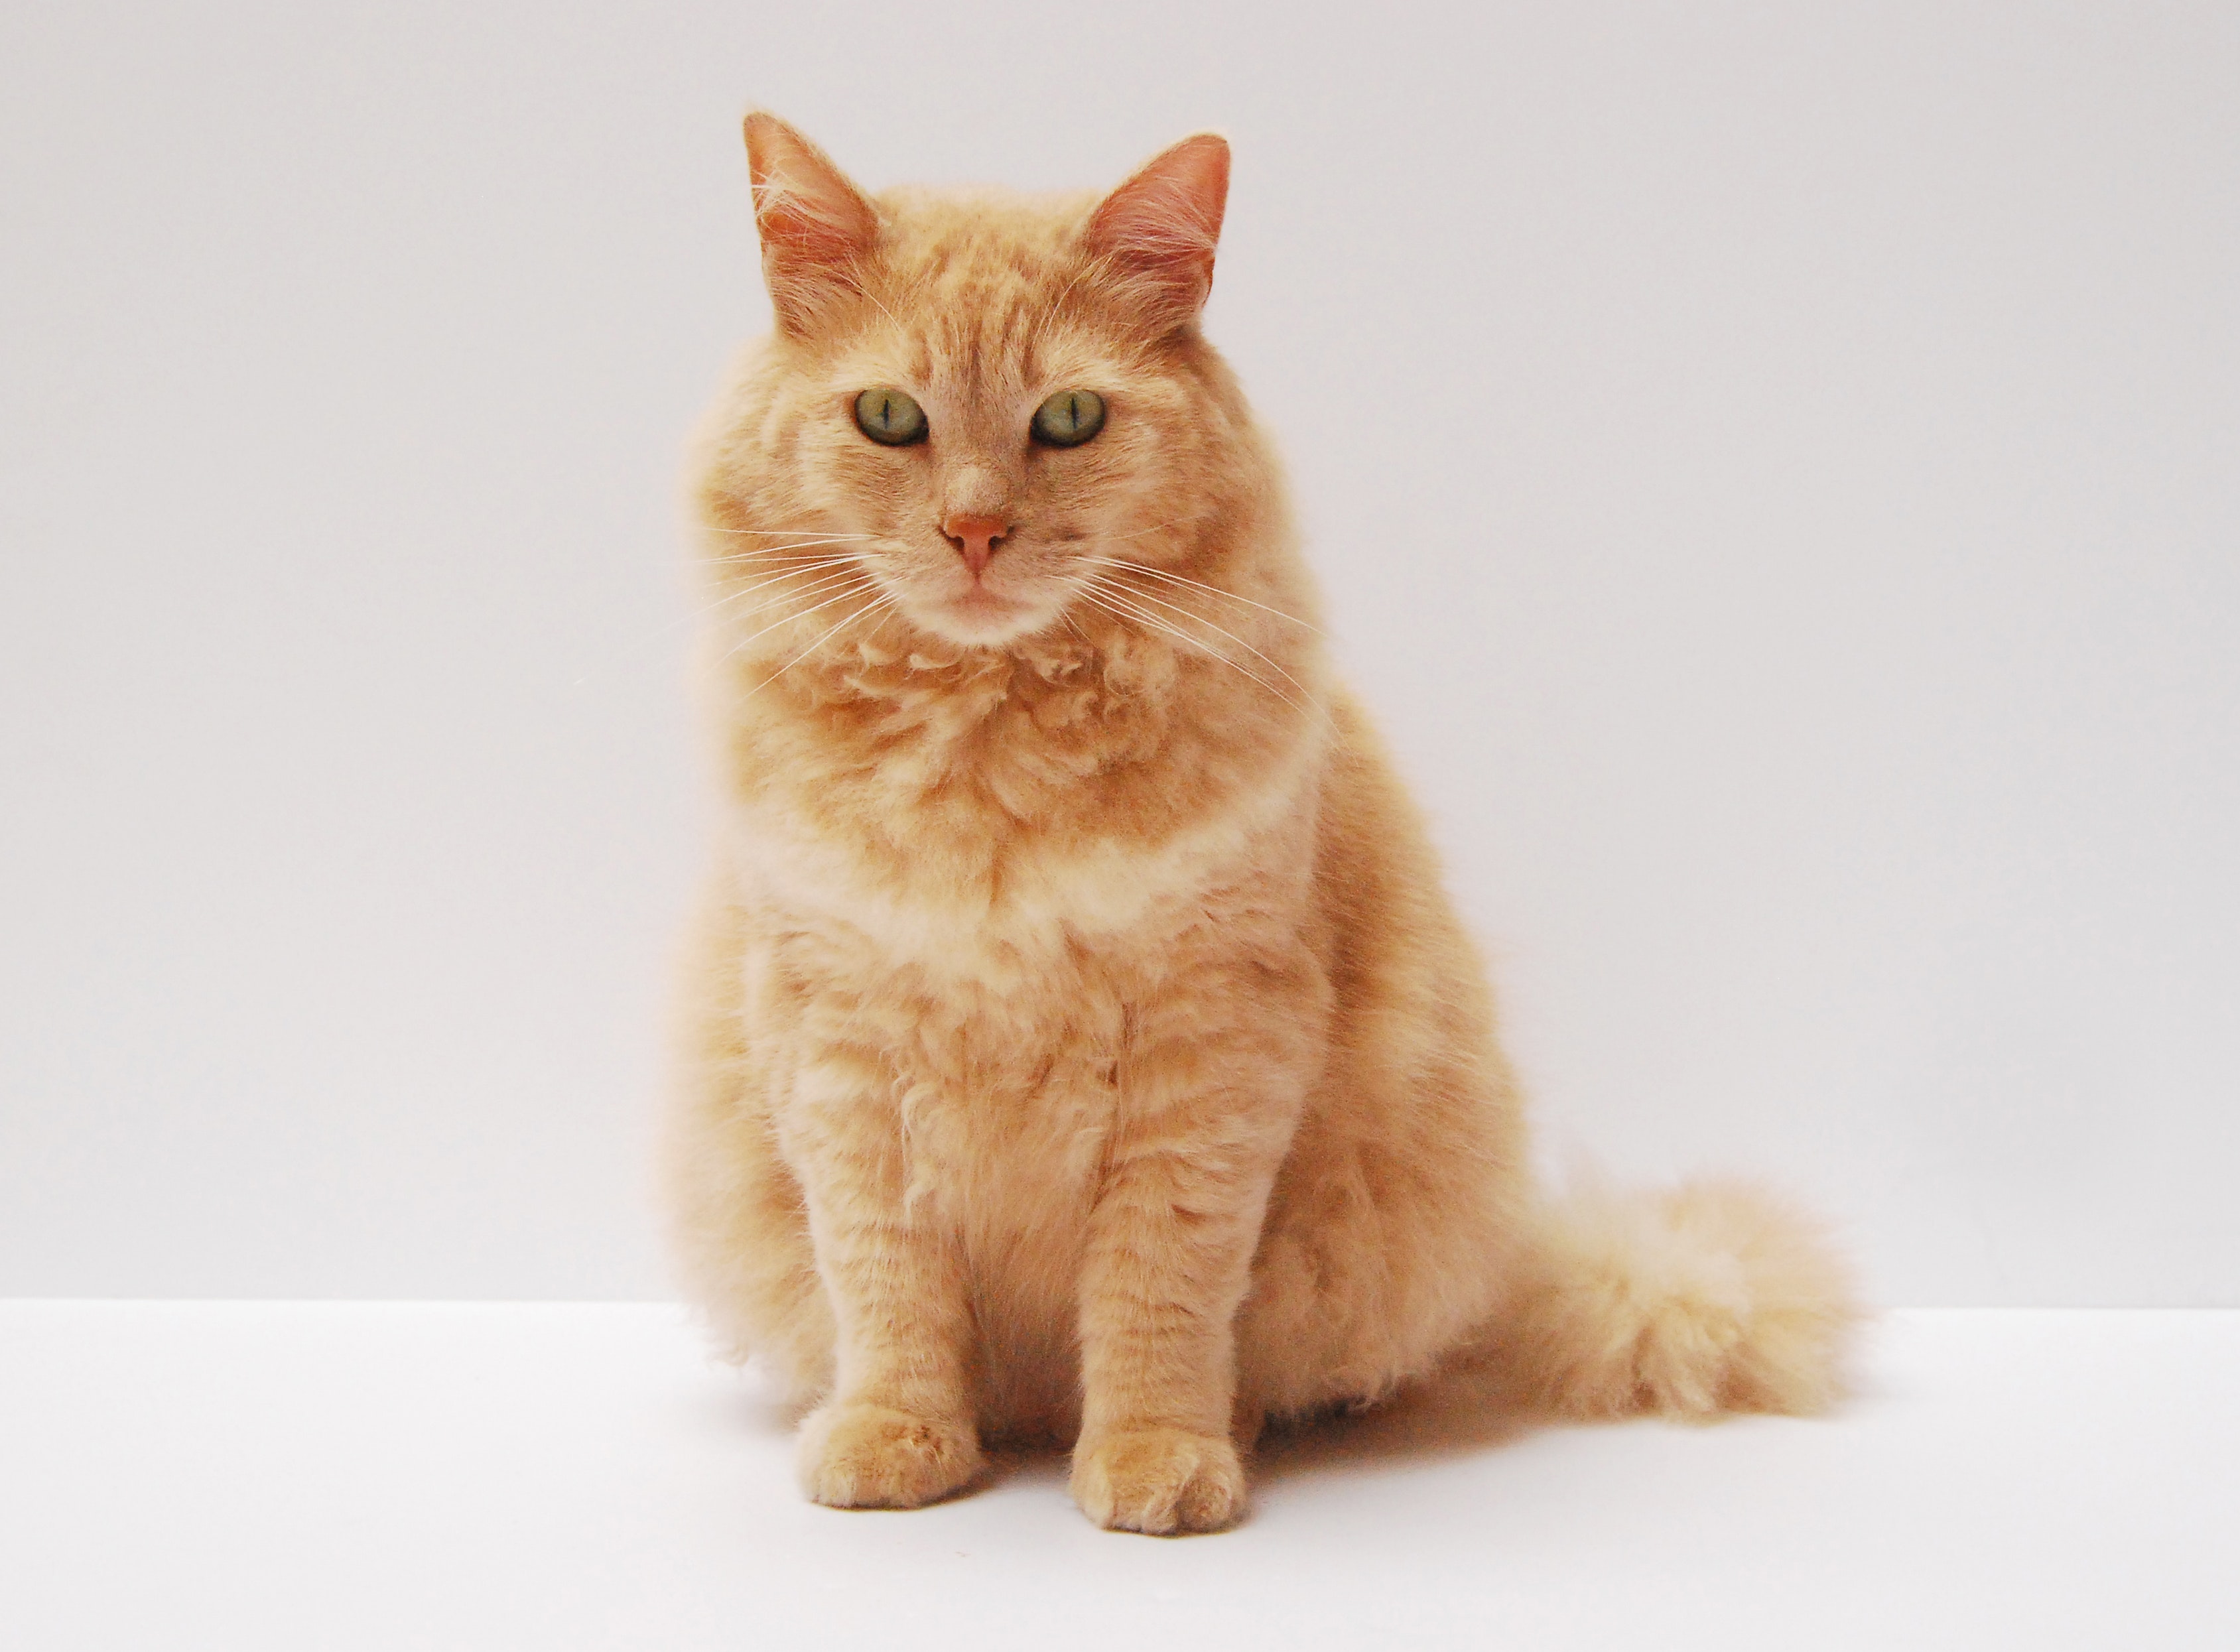 Cat Images · Pexels · Free Stock Photos